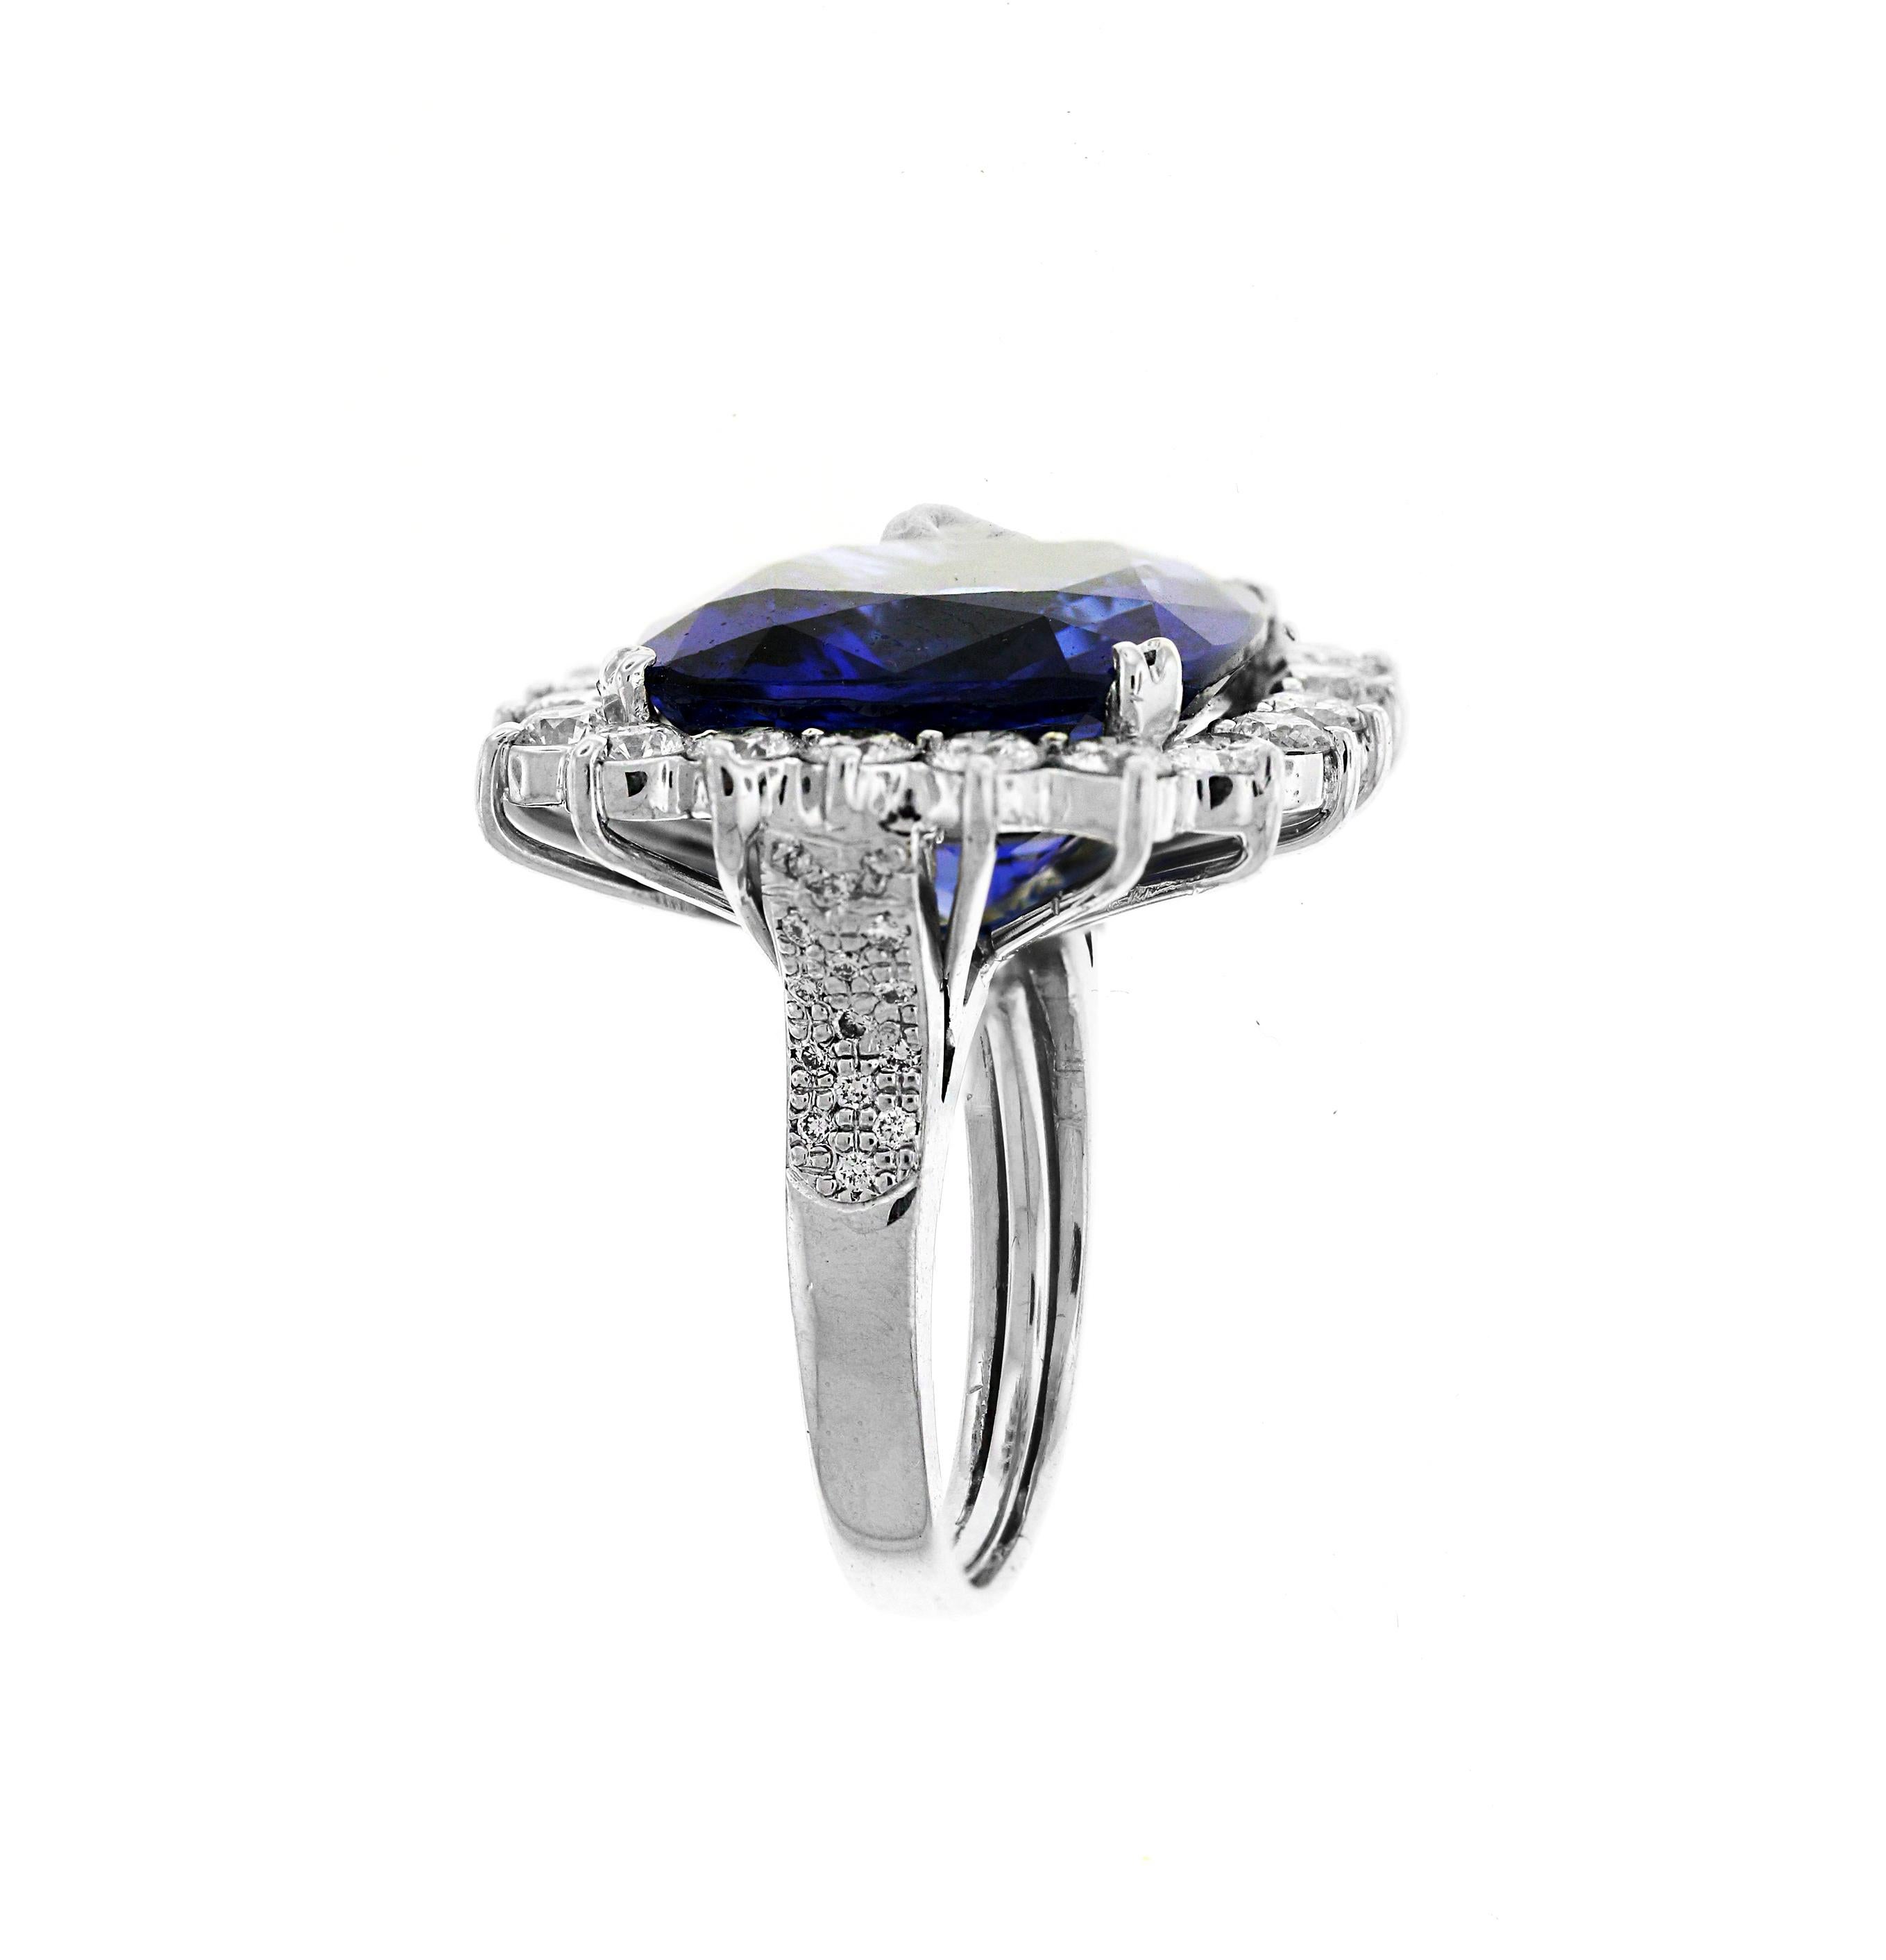 Women's Platinum Diamond Ring with Tanzanite Center